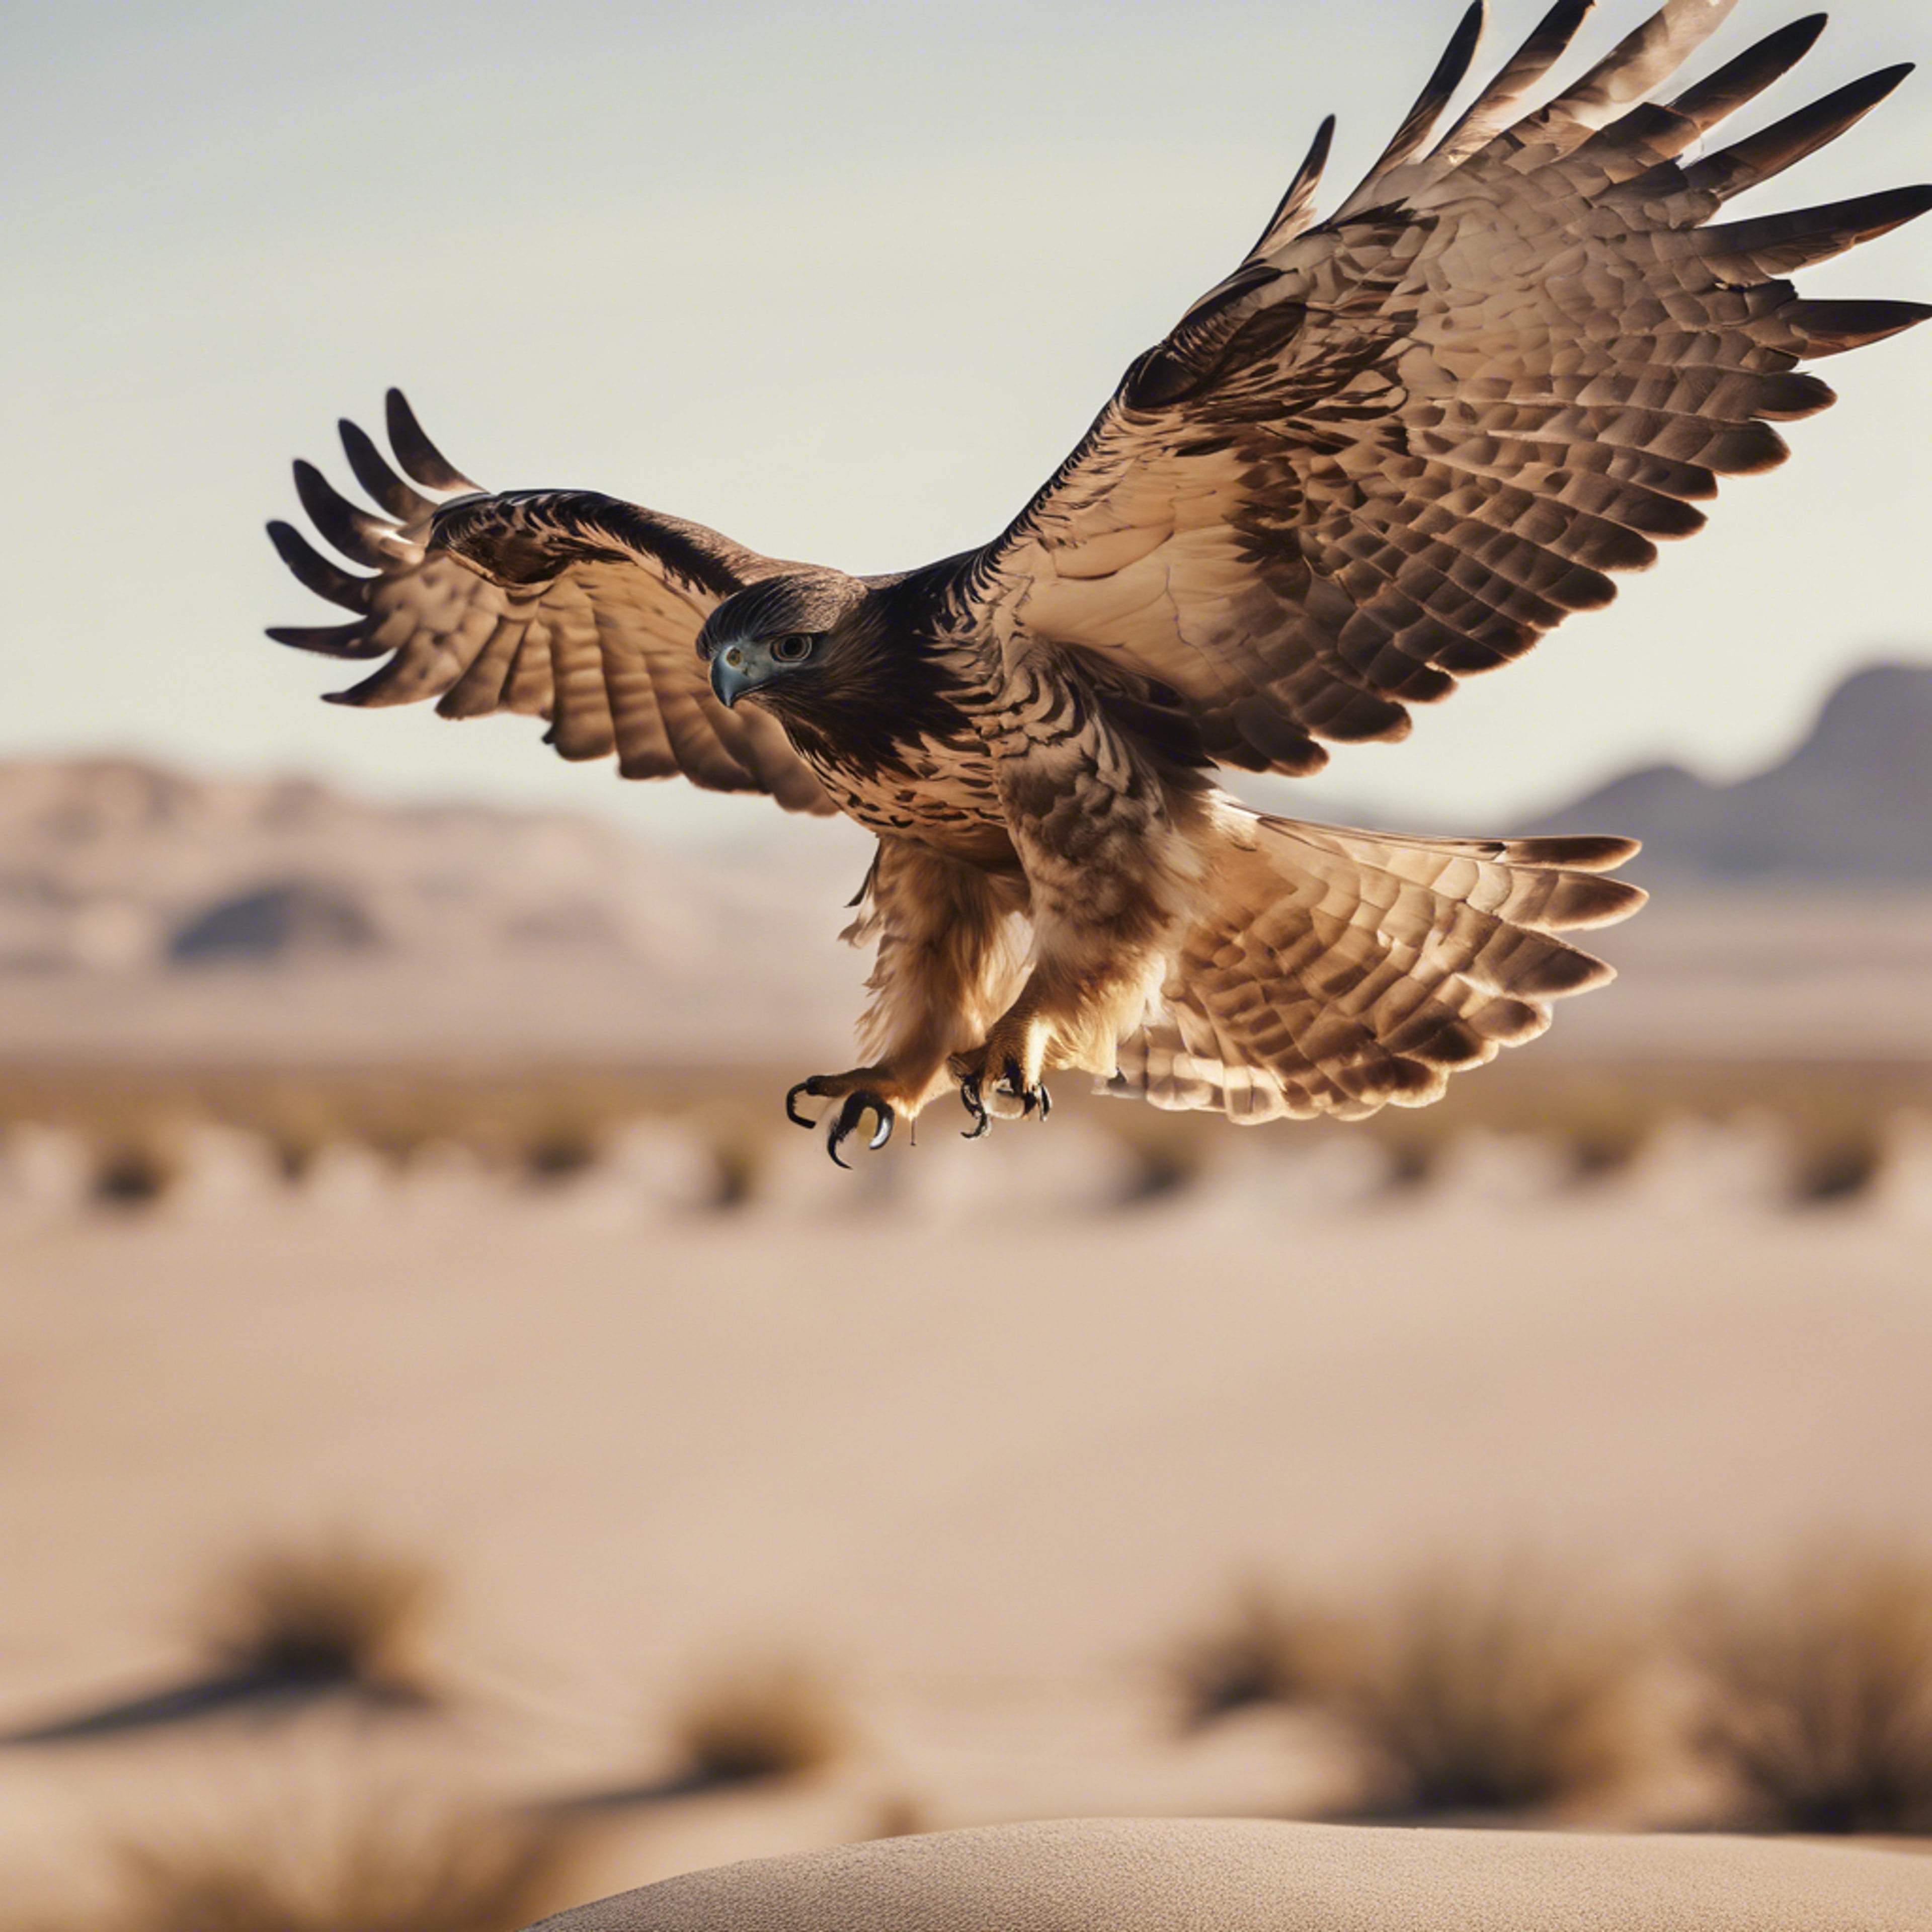 A hawk taking flight from its perch in a cool beige desert landscape. ផ្ទាំង​រូបភាព[f9770860966b45f09558]